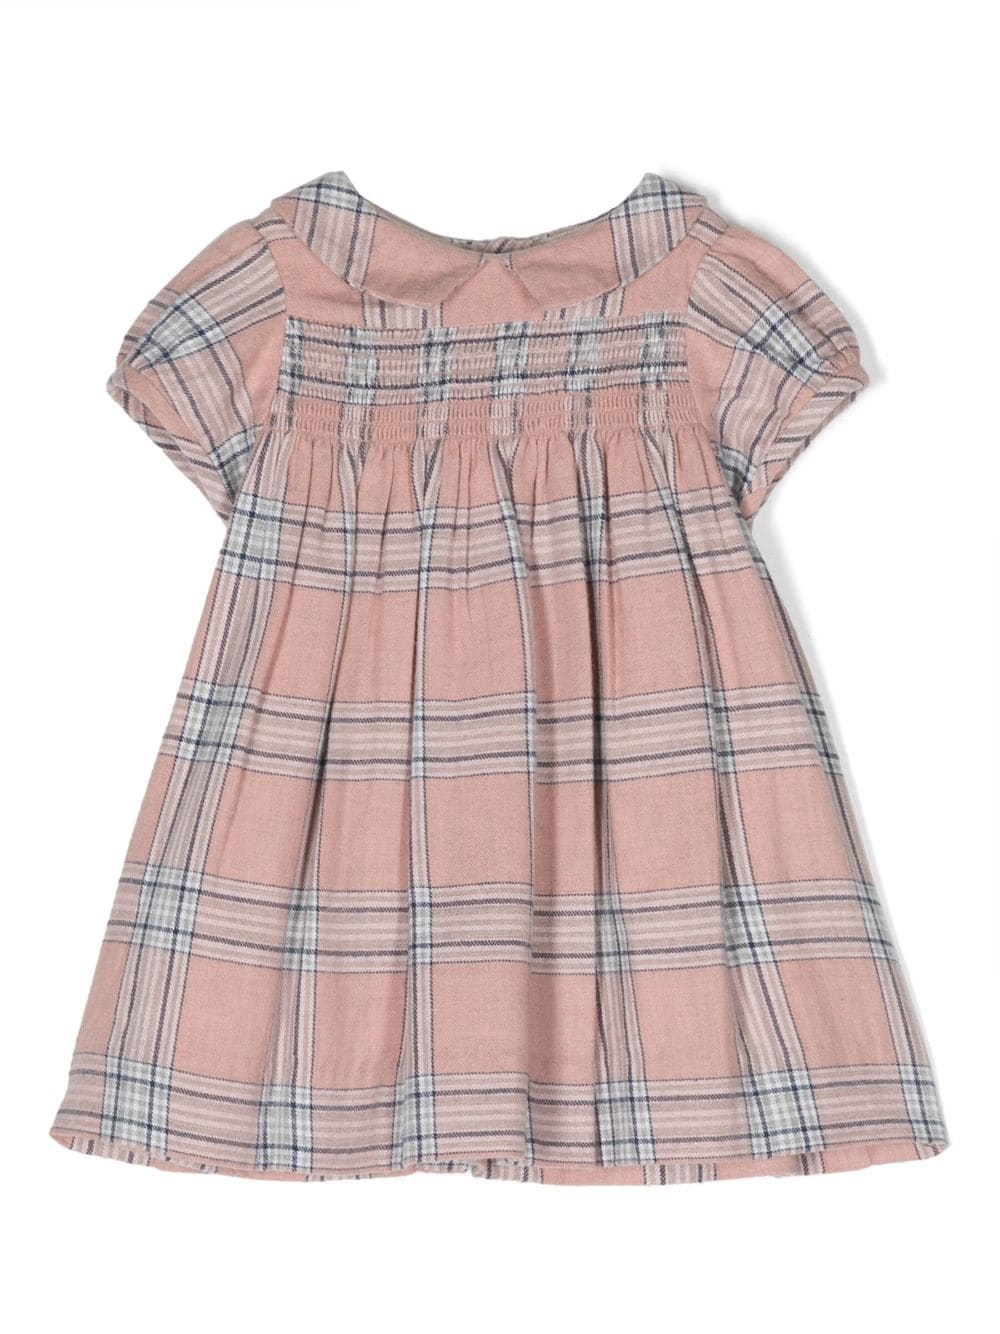 Check pink cotton muslin baby girl BONPOINT dress